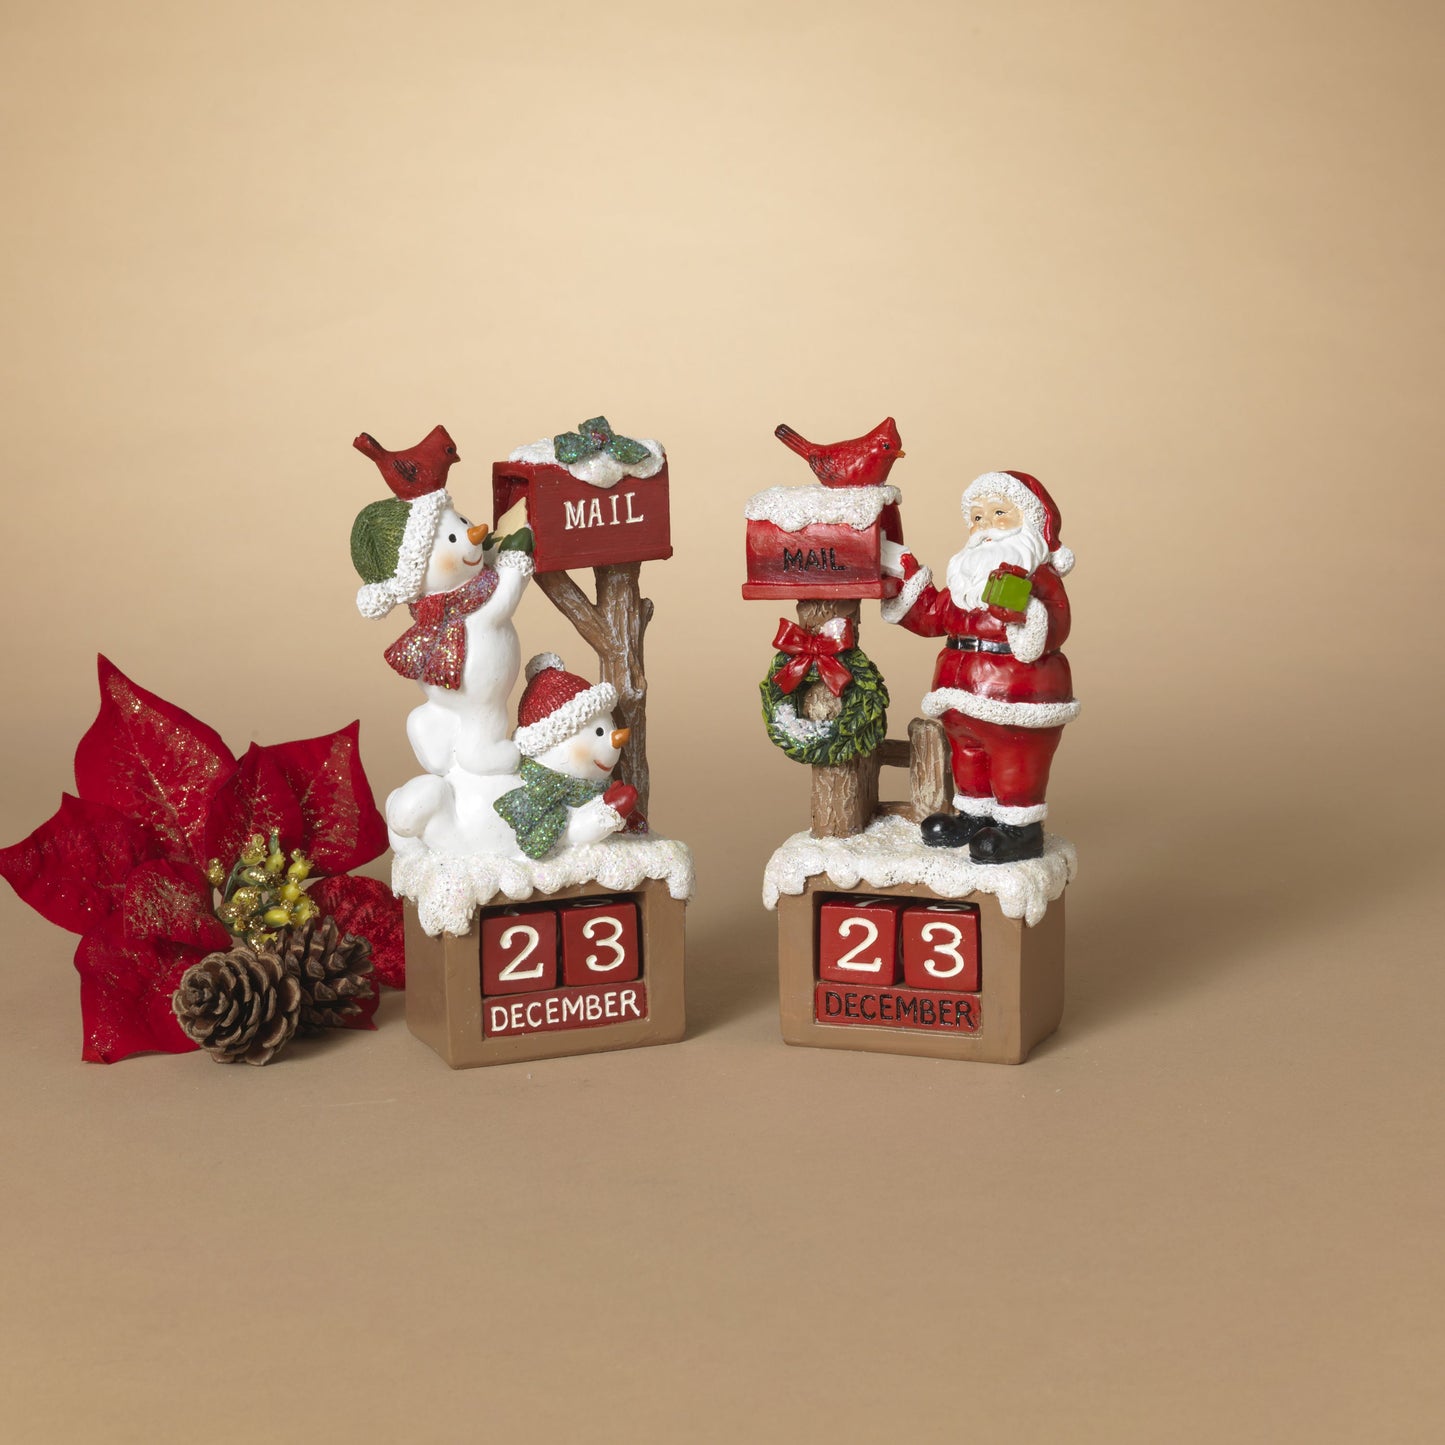 Gerson Company 7.8"H Resin Holiday Snowman & Santa Countdown Calendar, 2 Asst